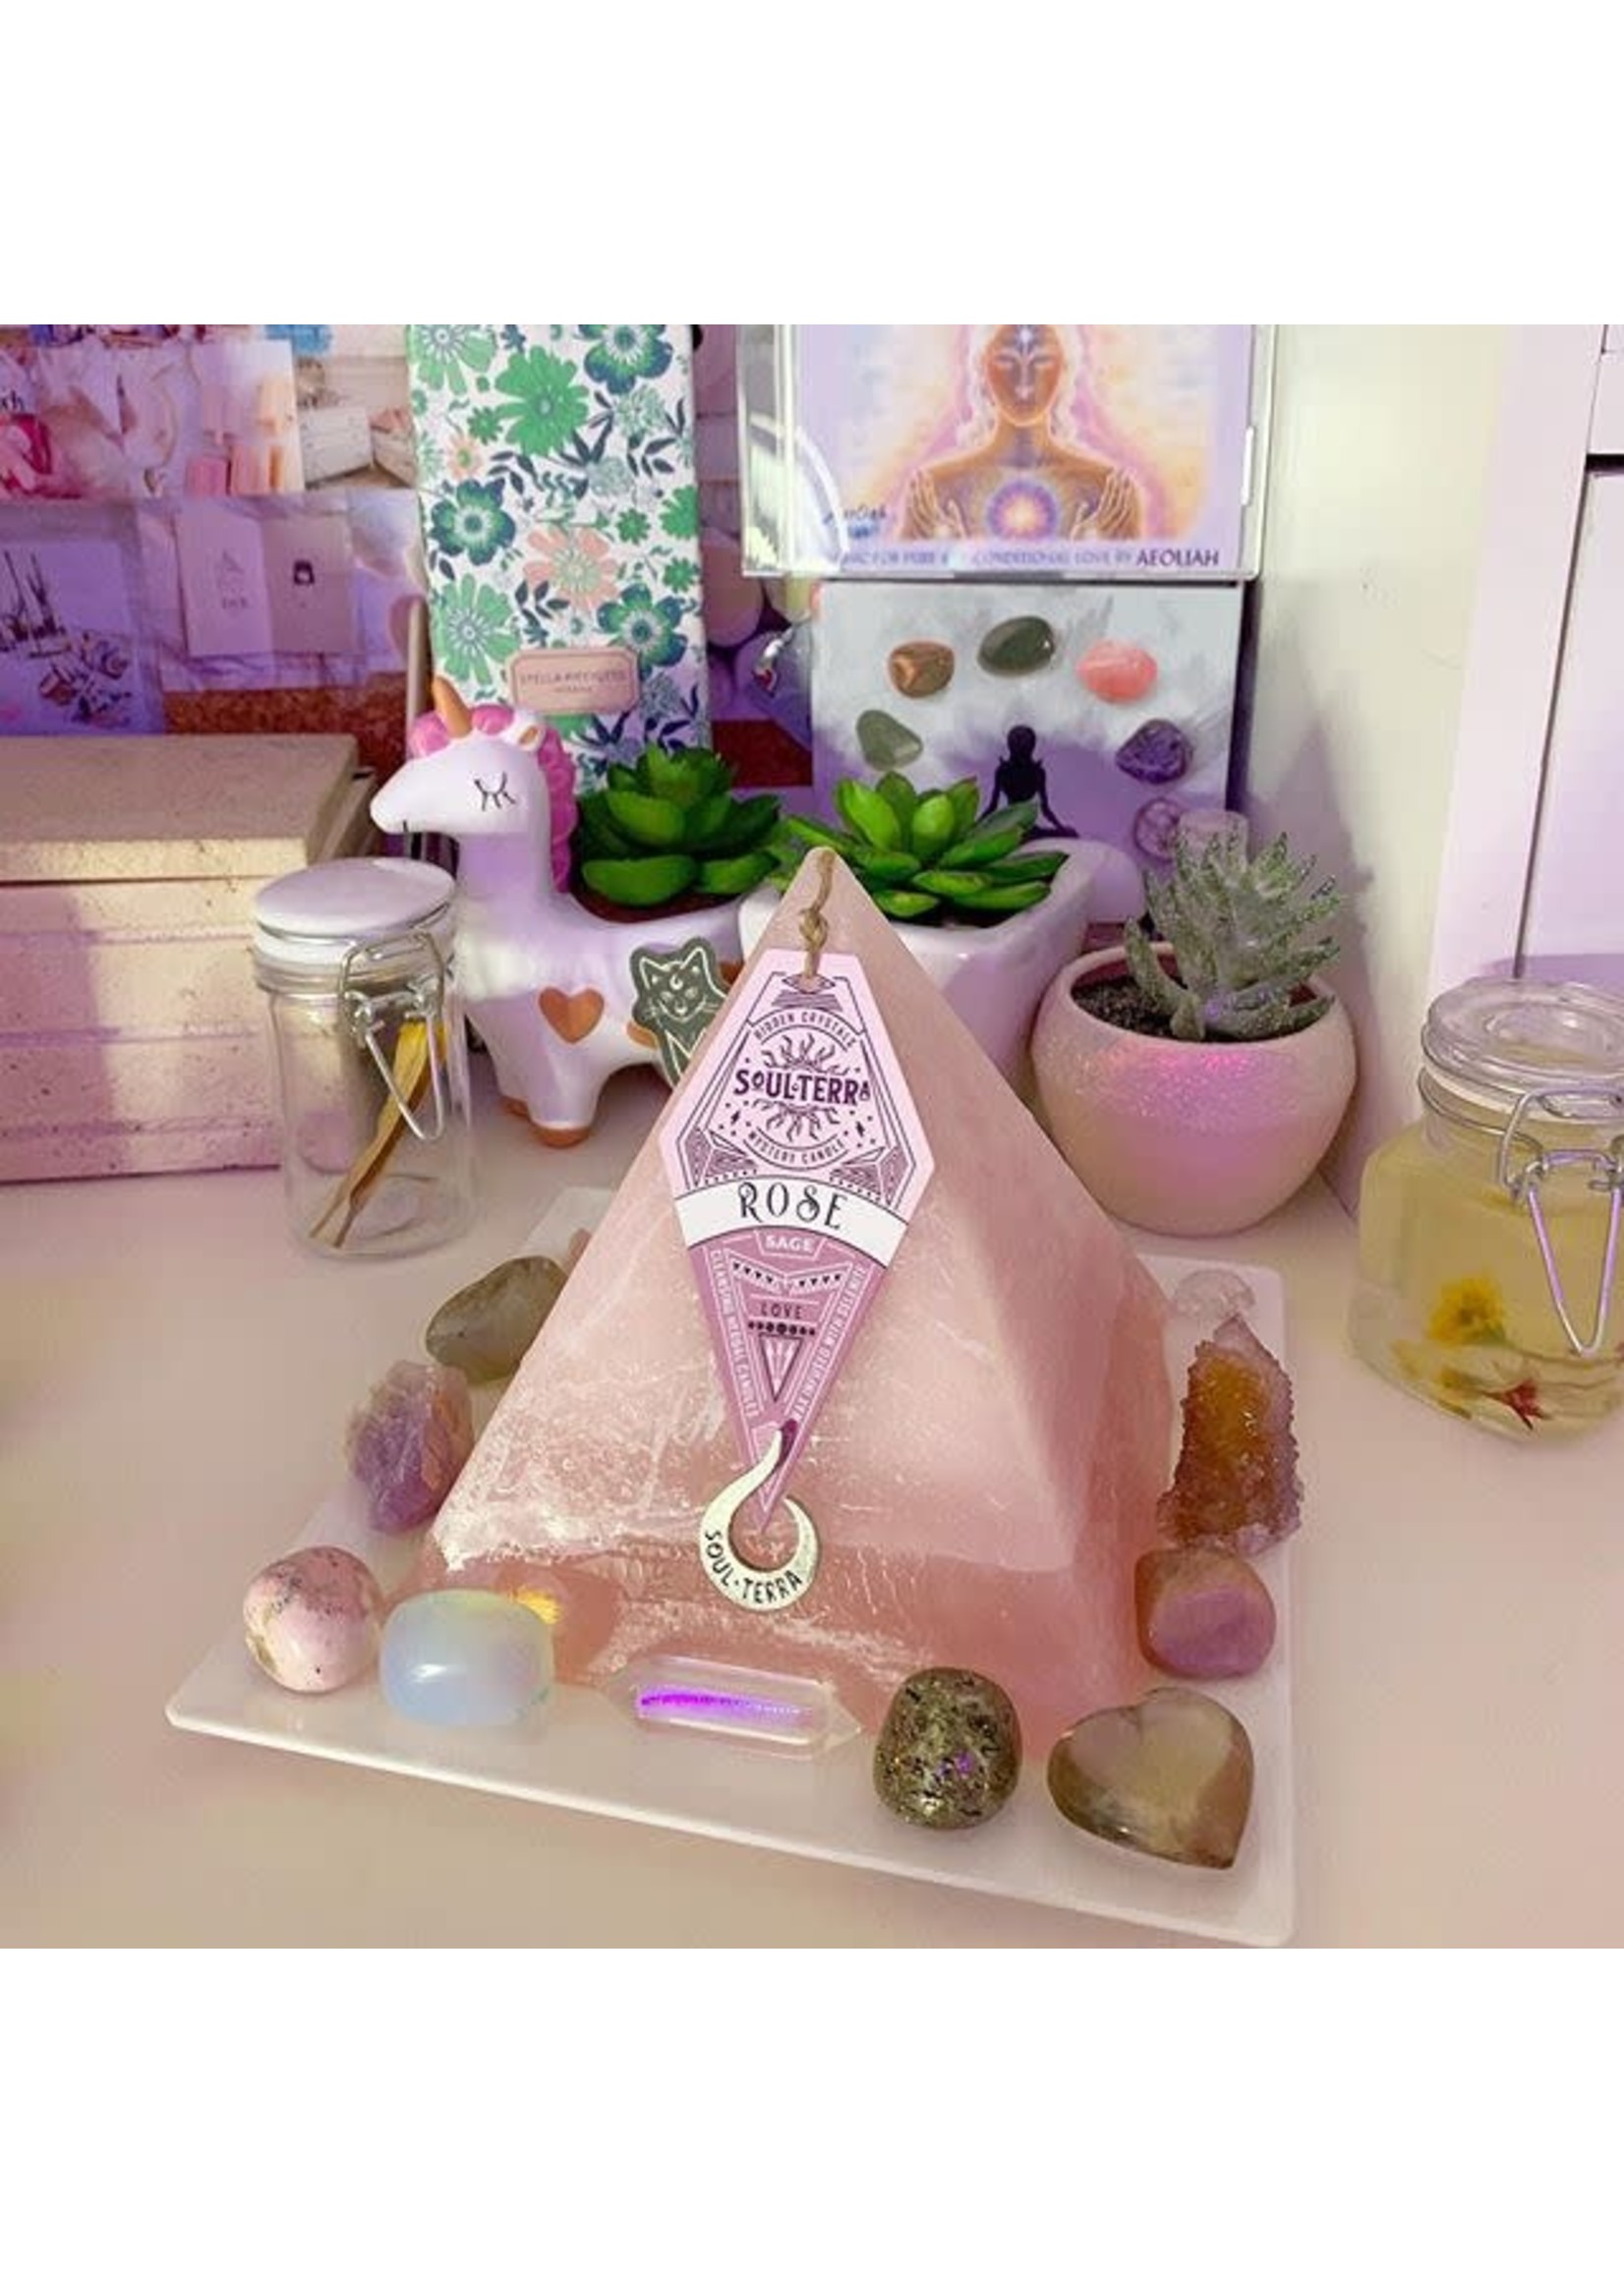 Soul-Terra Pyramid Candles